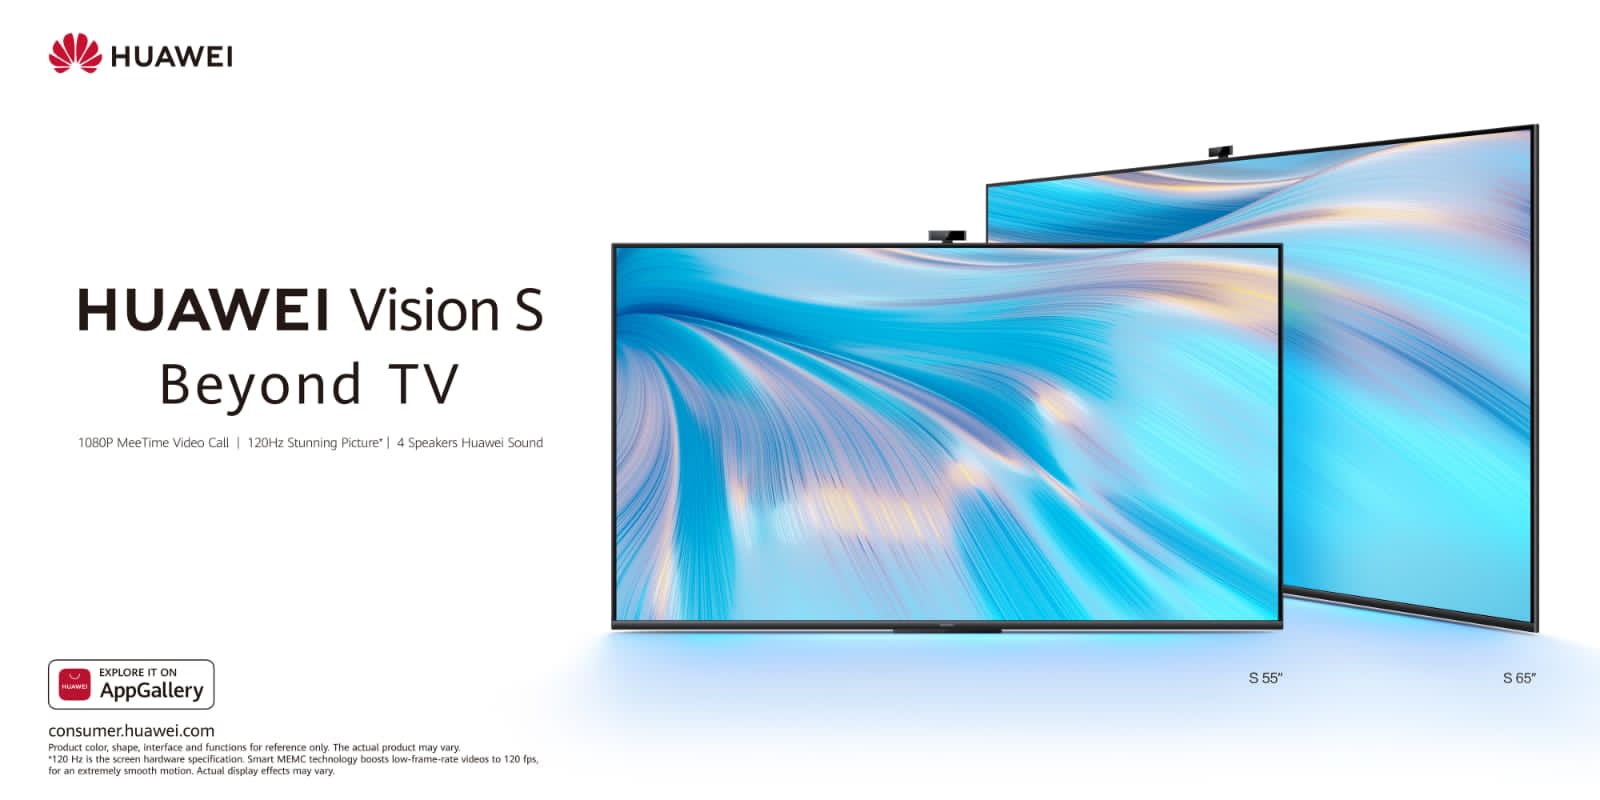 Huawei vision купить. Huawei Vision s 55 дюймов. Хуавей телевизор Вижн 65. 55" Huawei Vision s (hd55kan9a). Huawei Vision 75 дюймов.